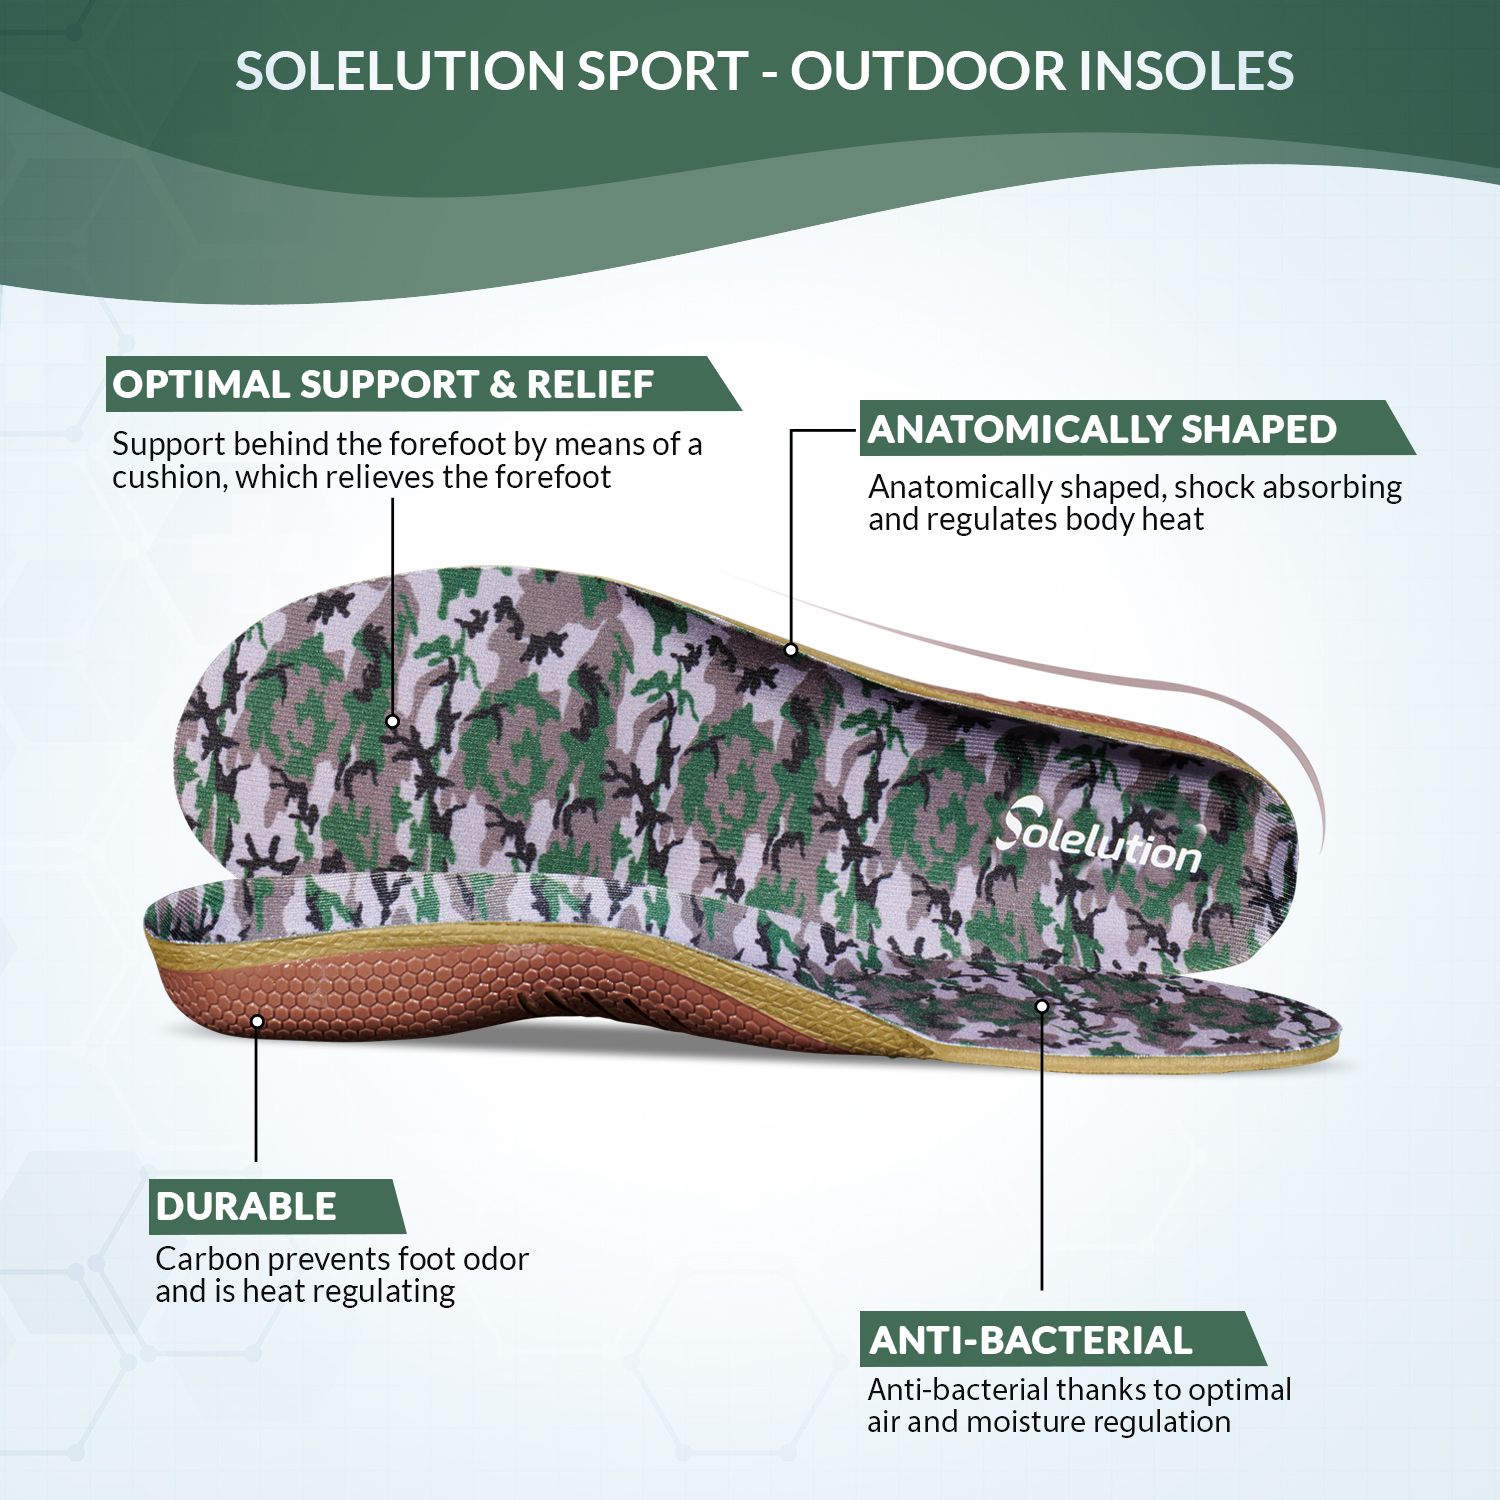 solelution sport outdoor insoles product information